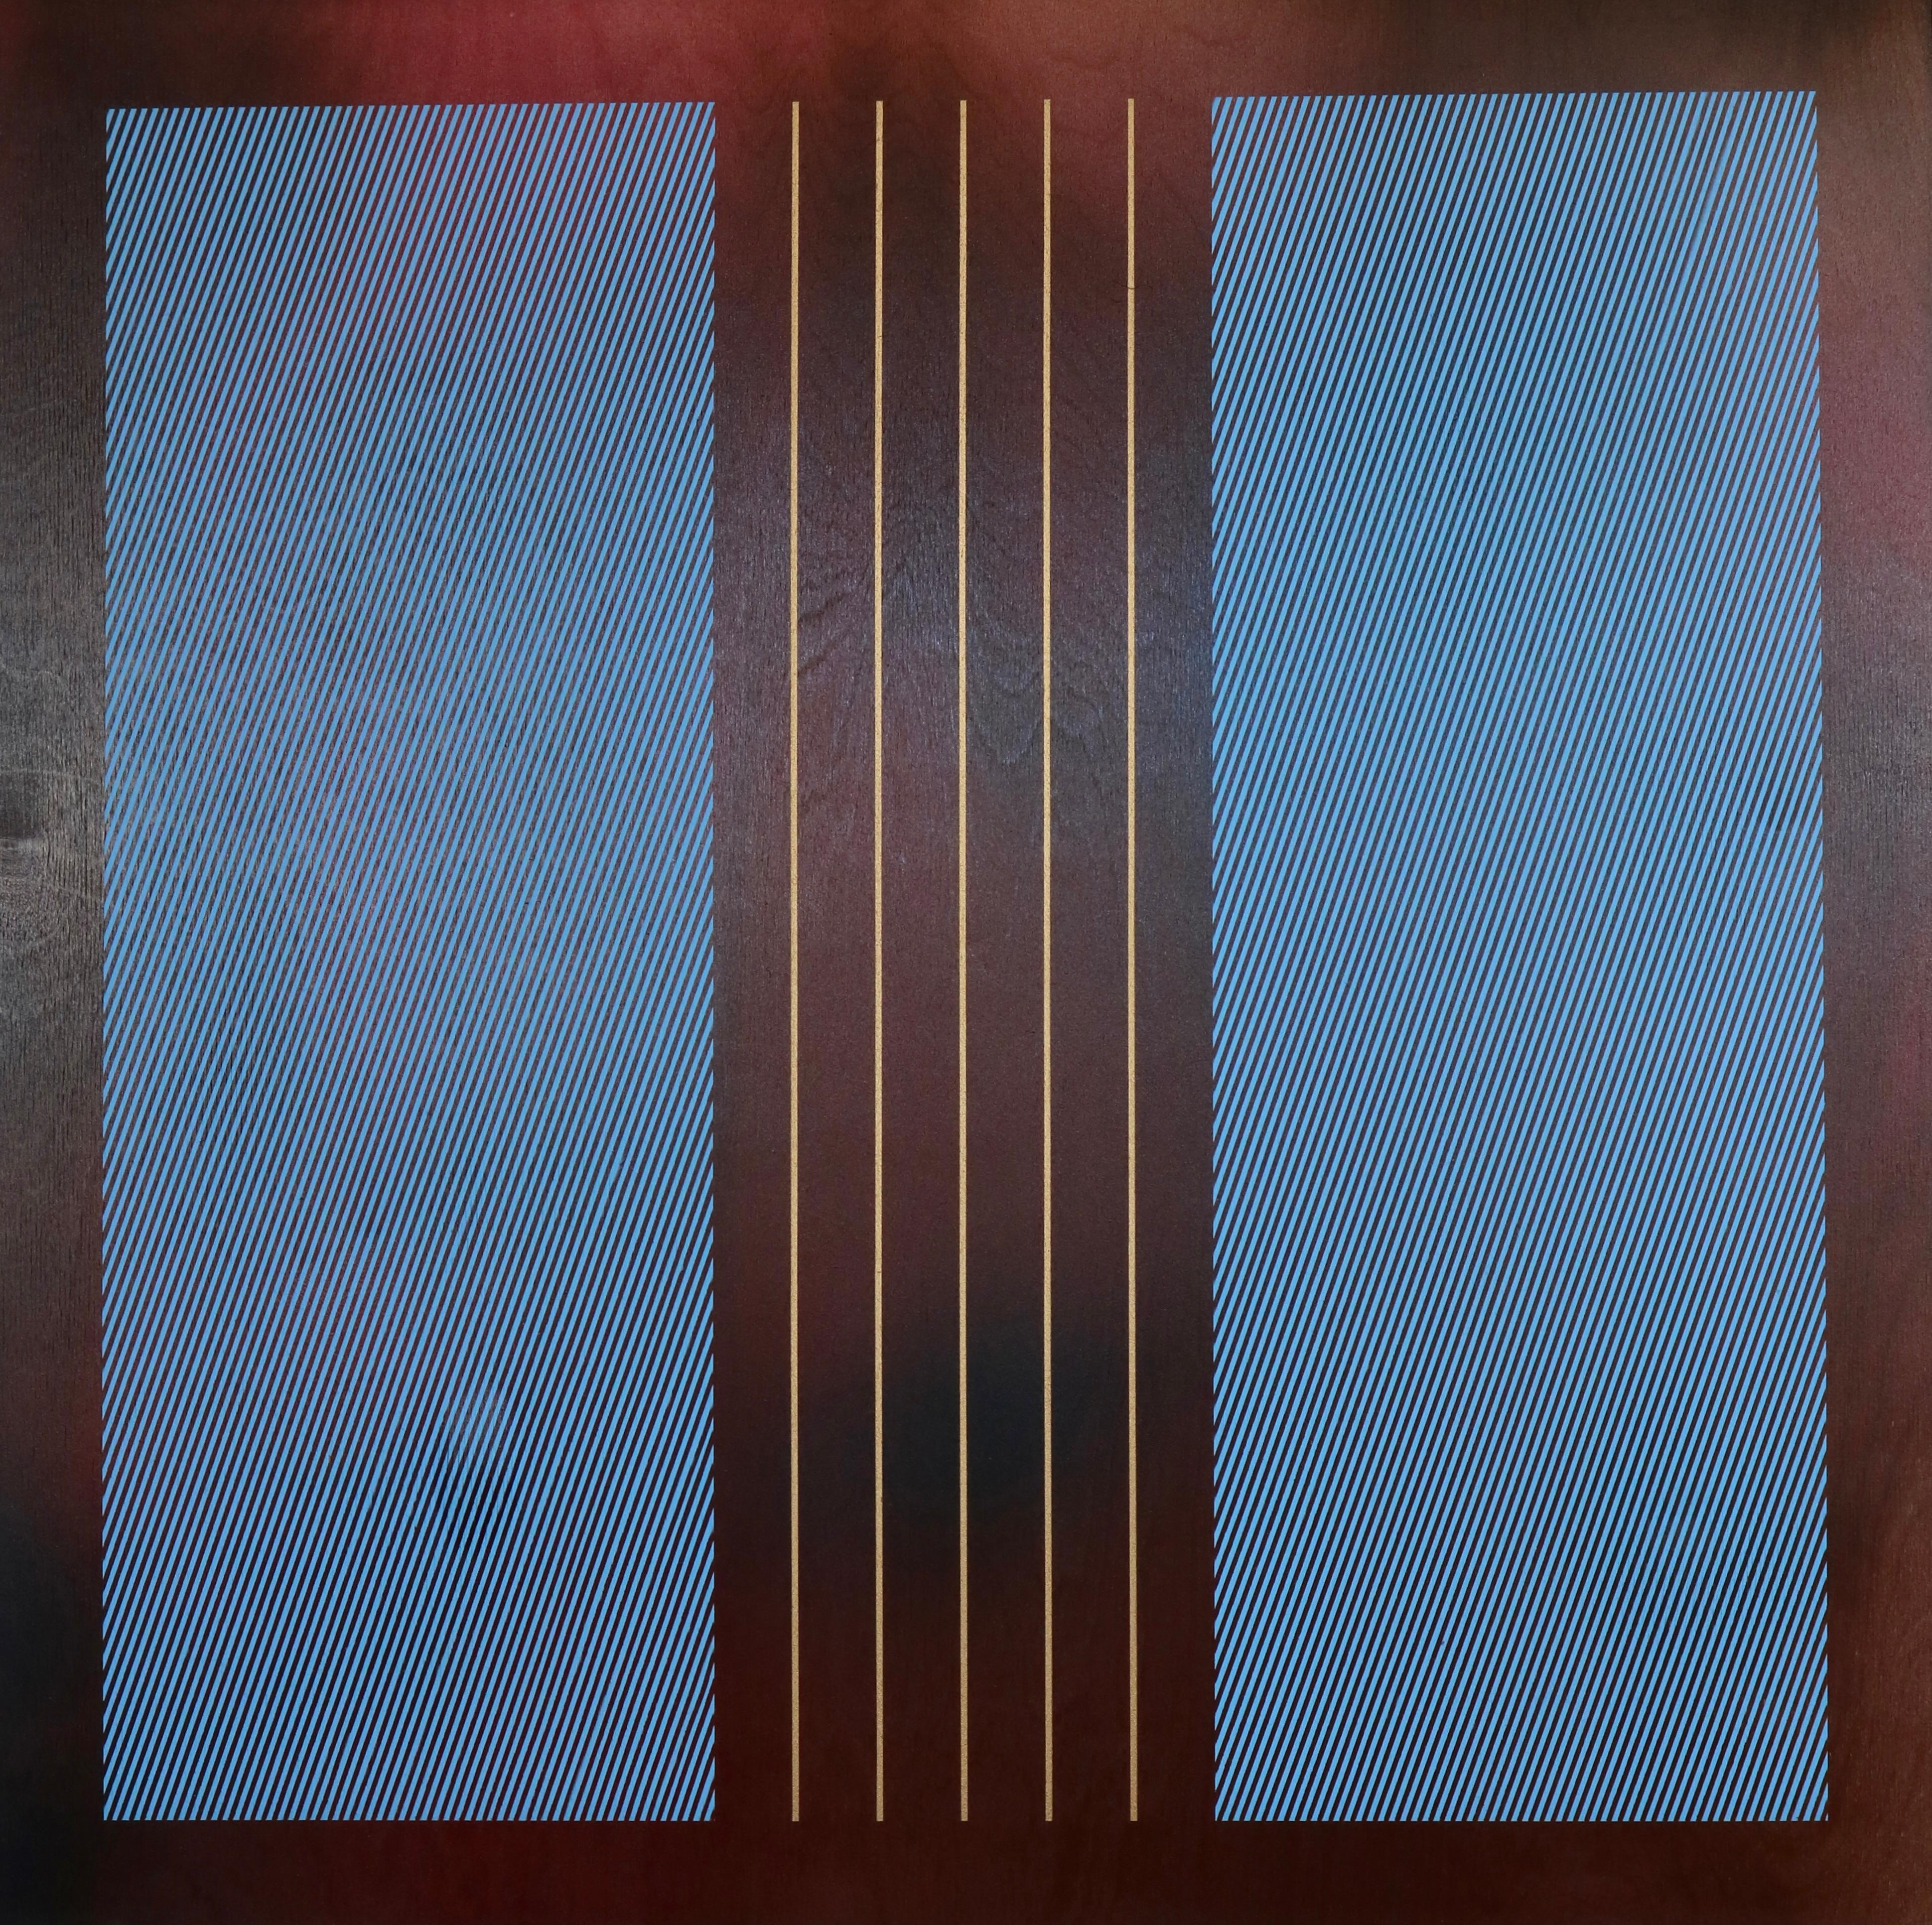 Mangata 2024.3 rouge vif, grille bleu ciel, minimale, carrée, rayures dorées - Mixed Media Art de Melisa Taylor Metzger